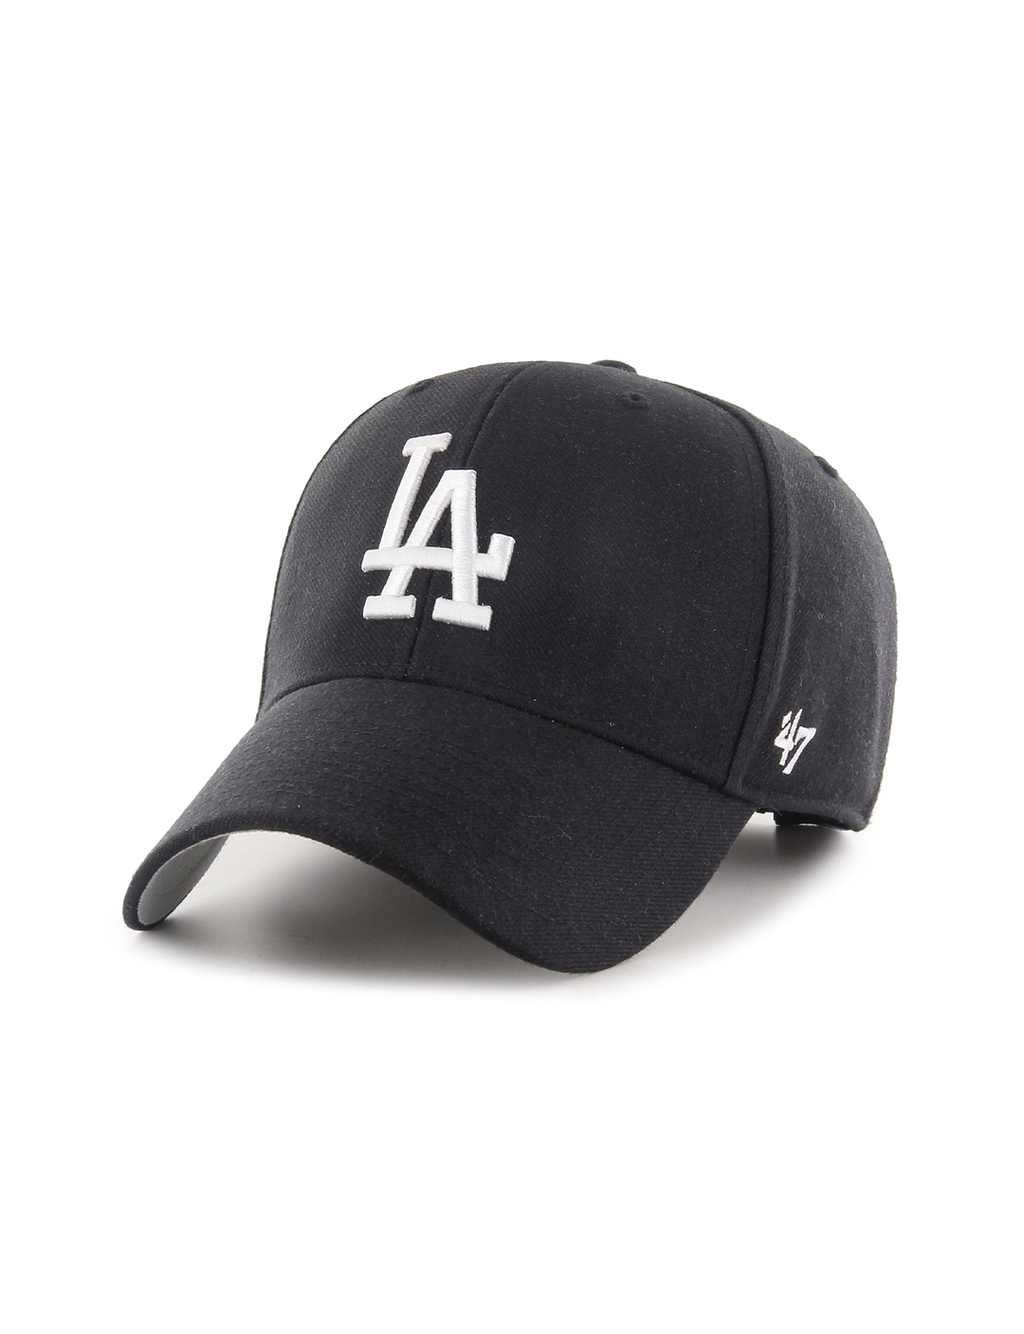 LA Dodgers MVP Ball Cap, Black/White